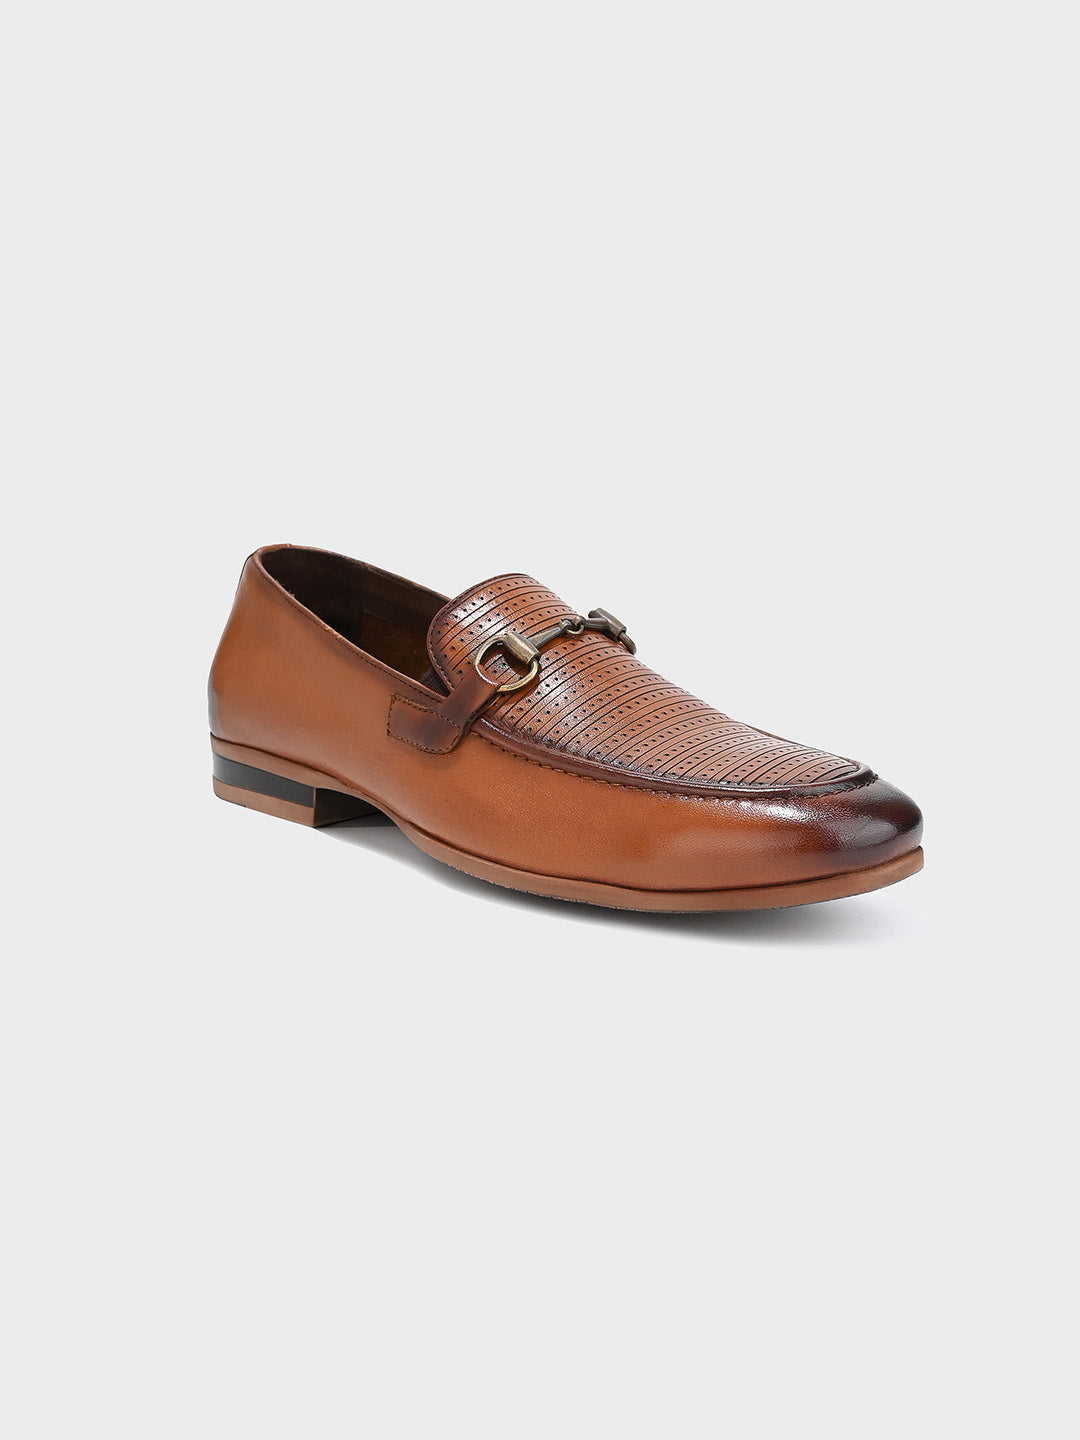 Tan Leather Men's Loafer Slip-On Shoes